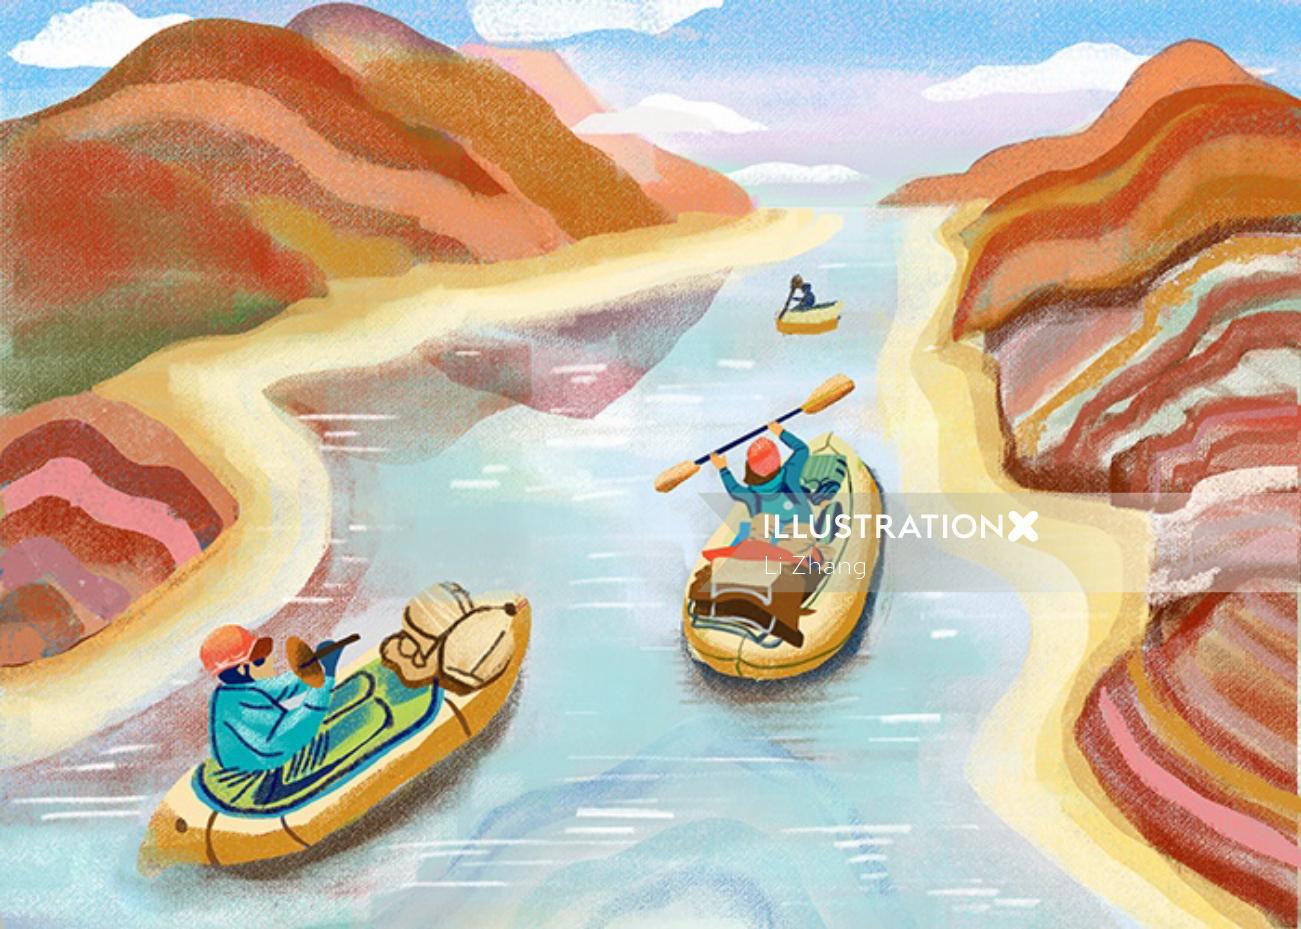 River rafting illustration 